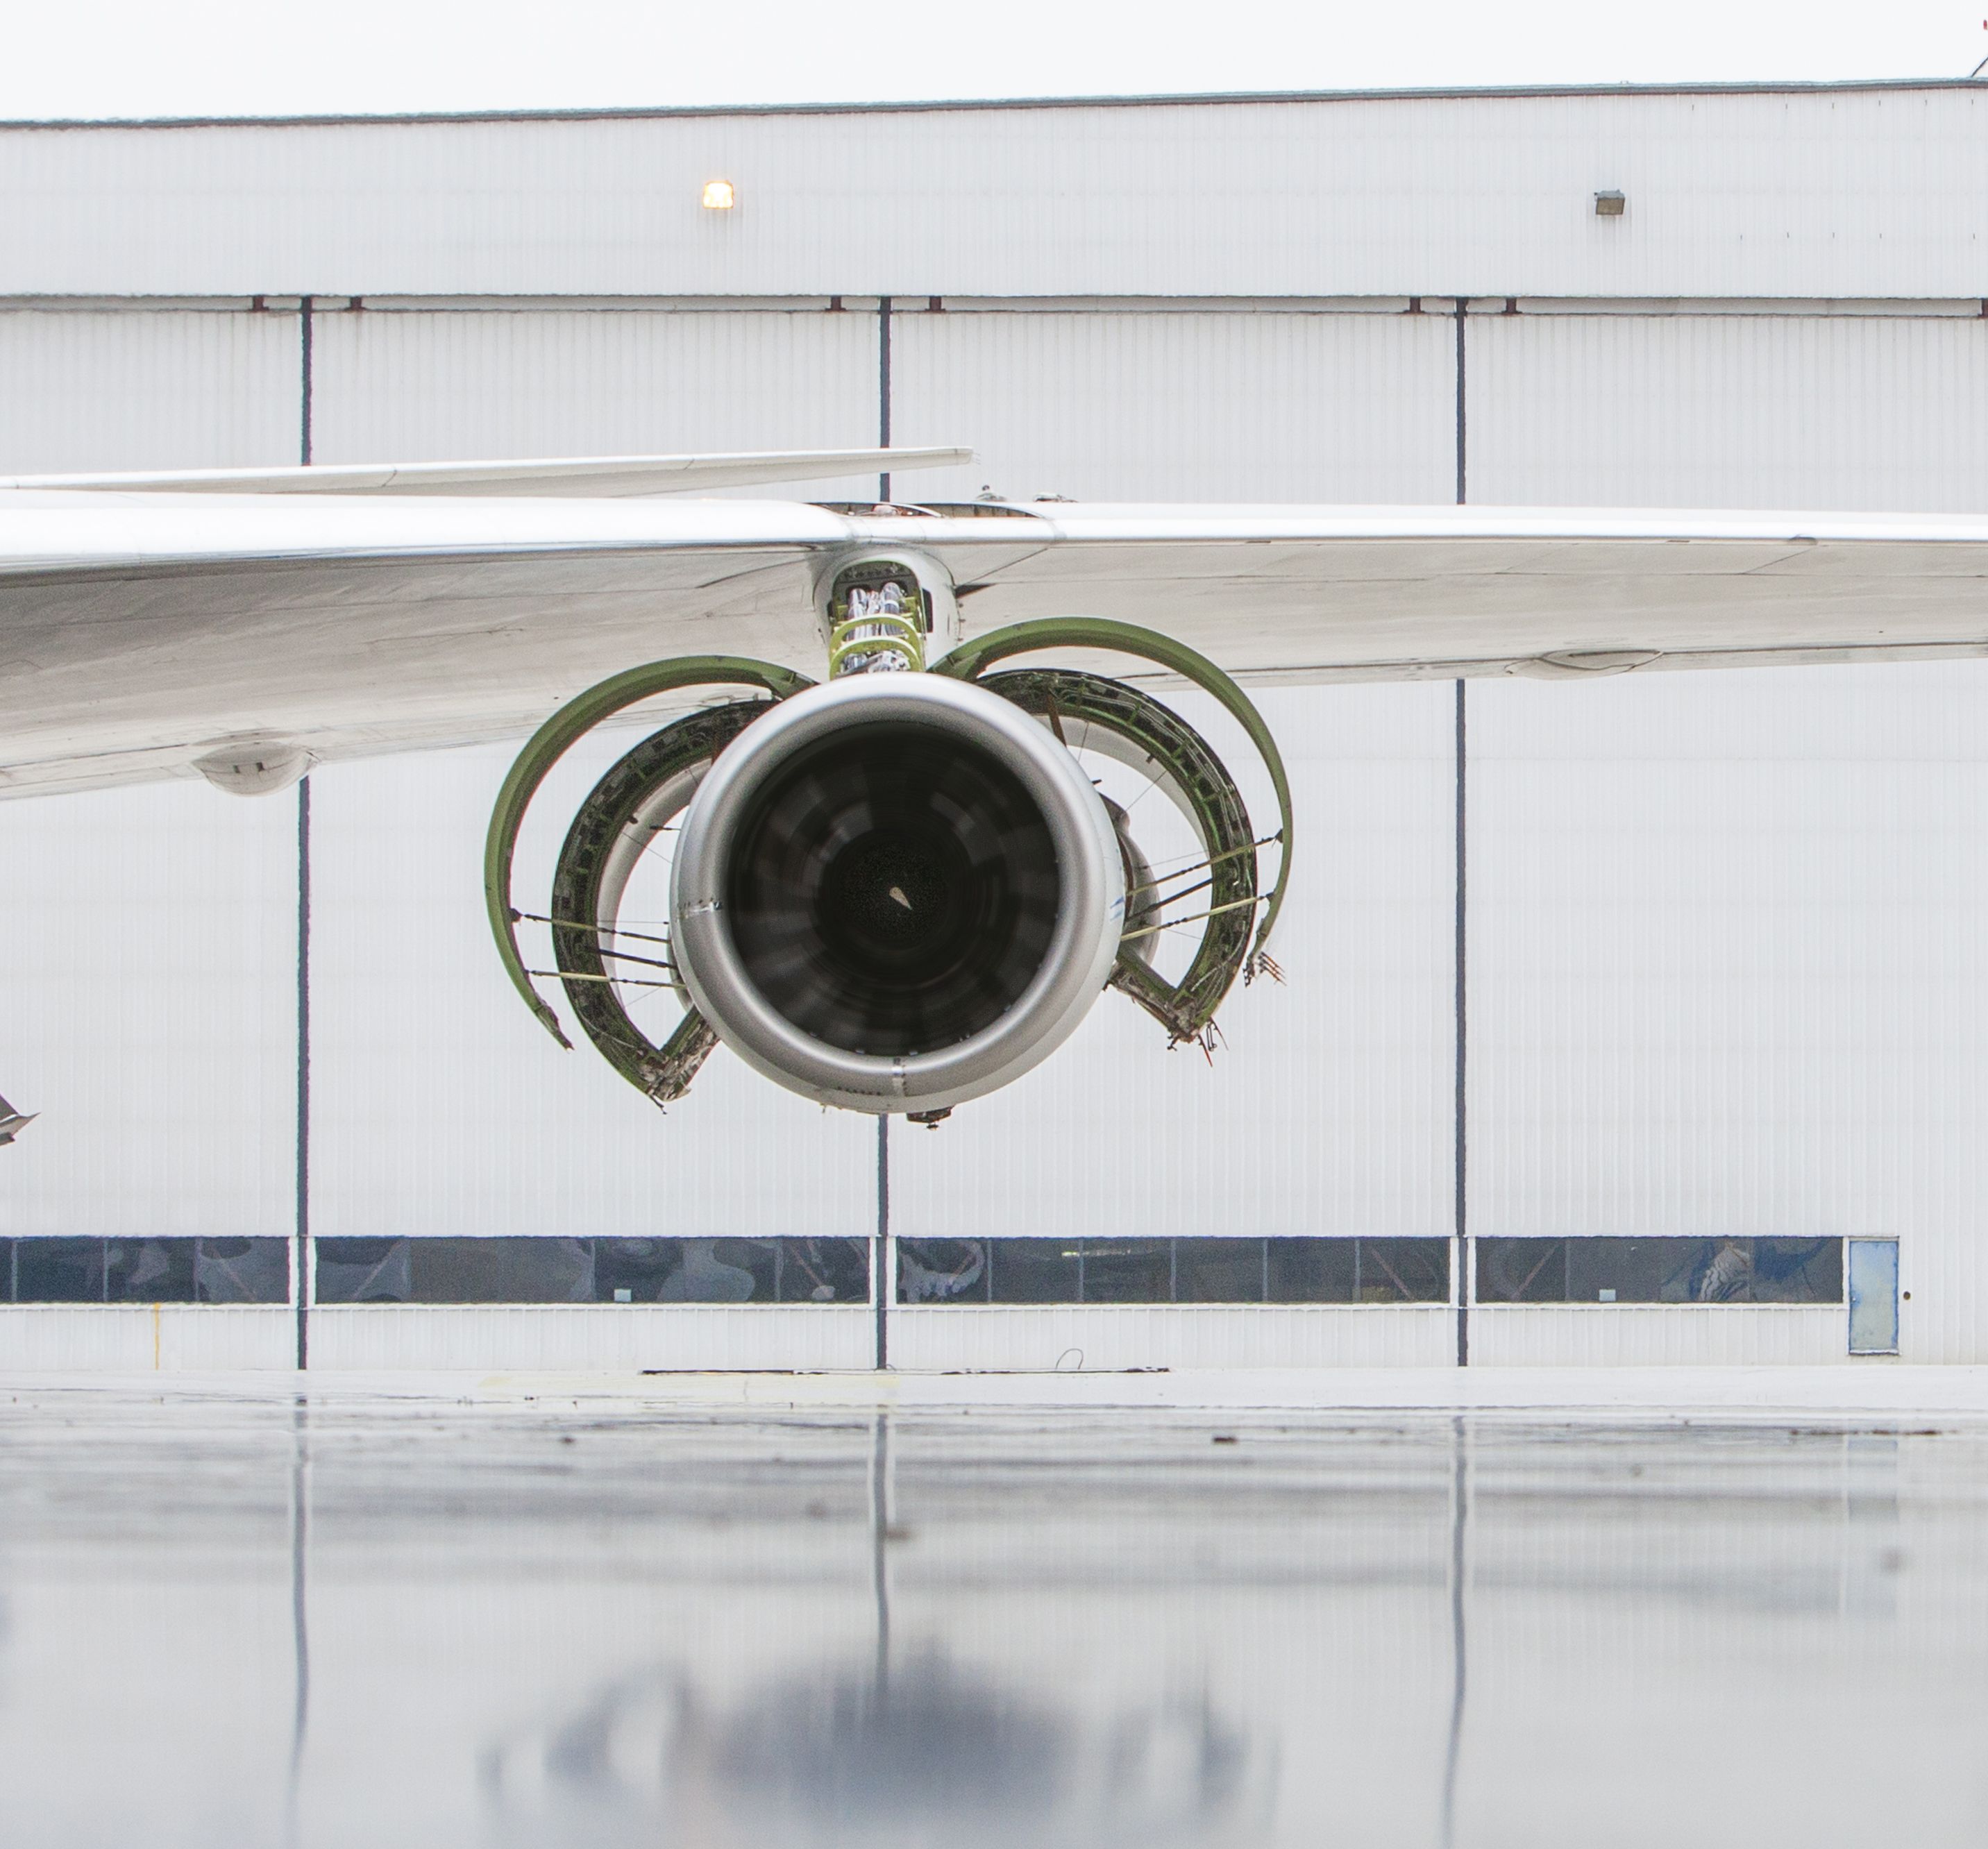 Iberia Is Now Authorized To Maintain Pratt & Whitney Engines